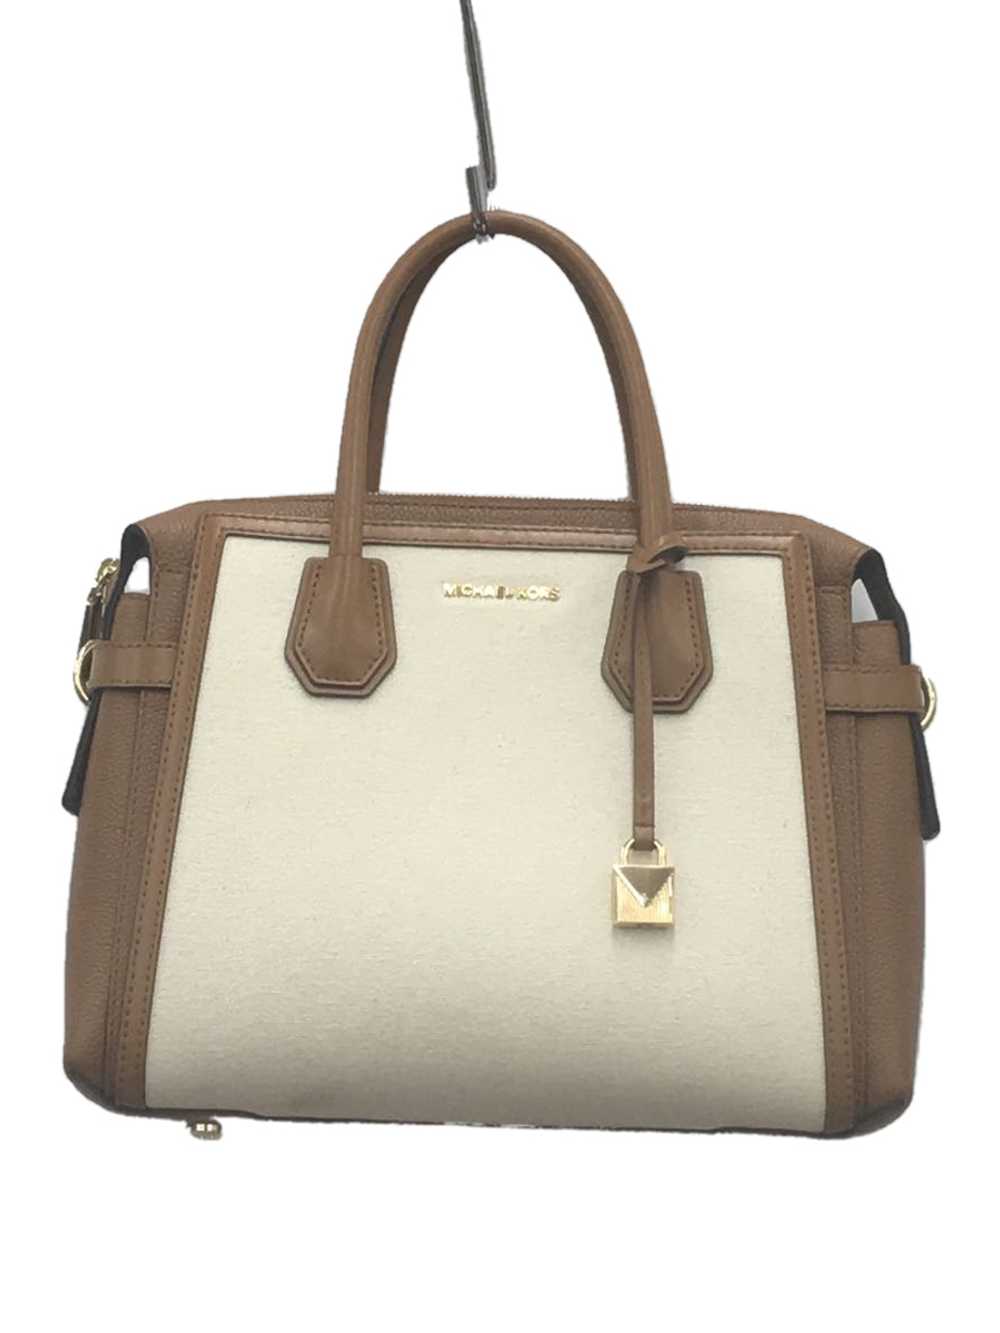 Michael Kors Handbag/Canvas/Brw/Plain Bag - image 1